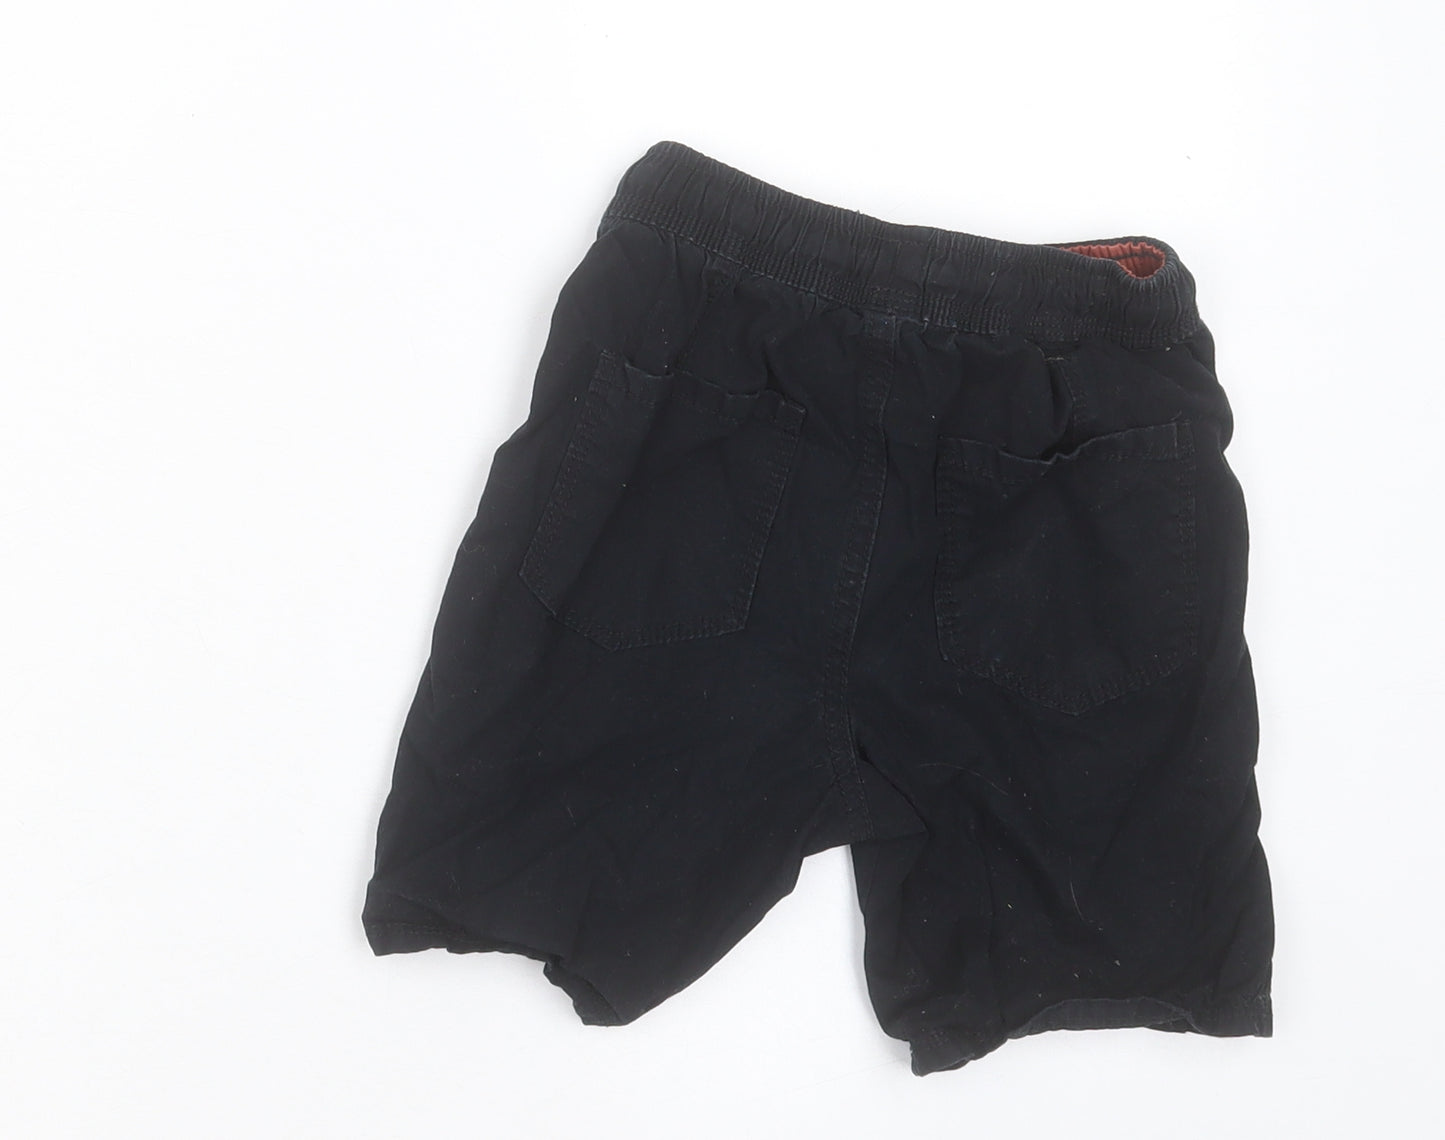 George Boys Black Cotton Bermuda Shorts Size 4-5 Years Regular Drawstring